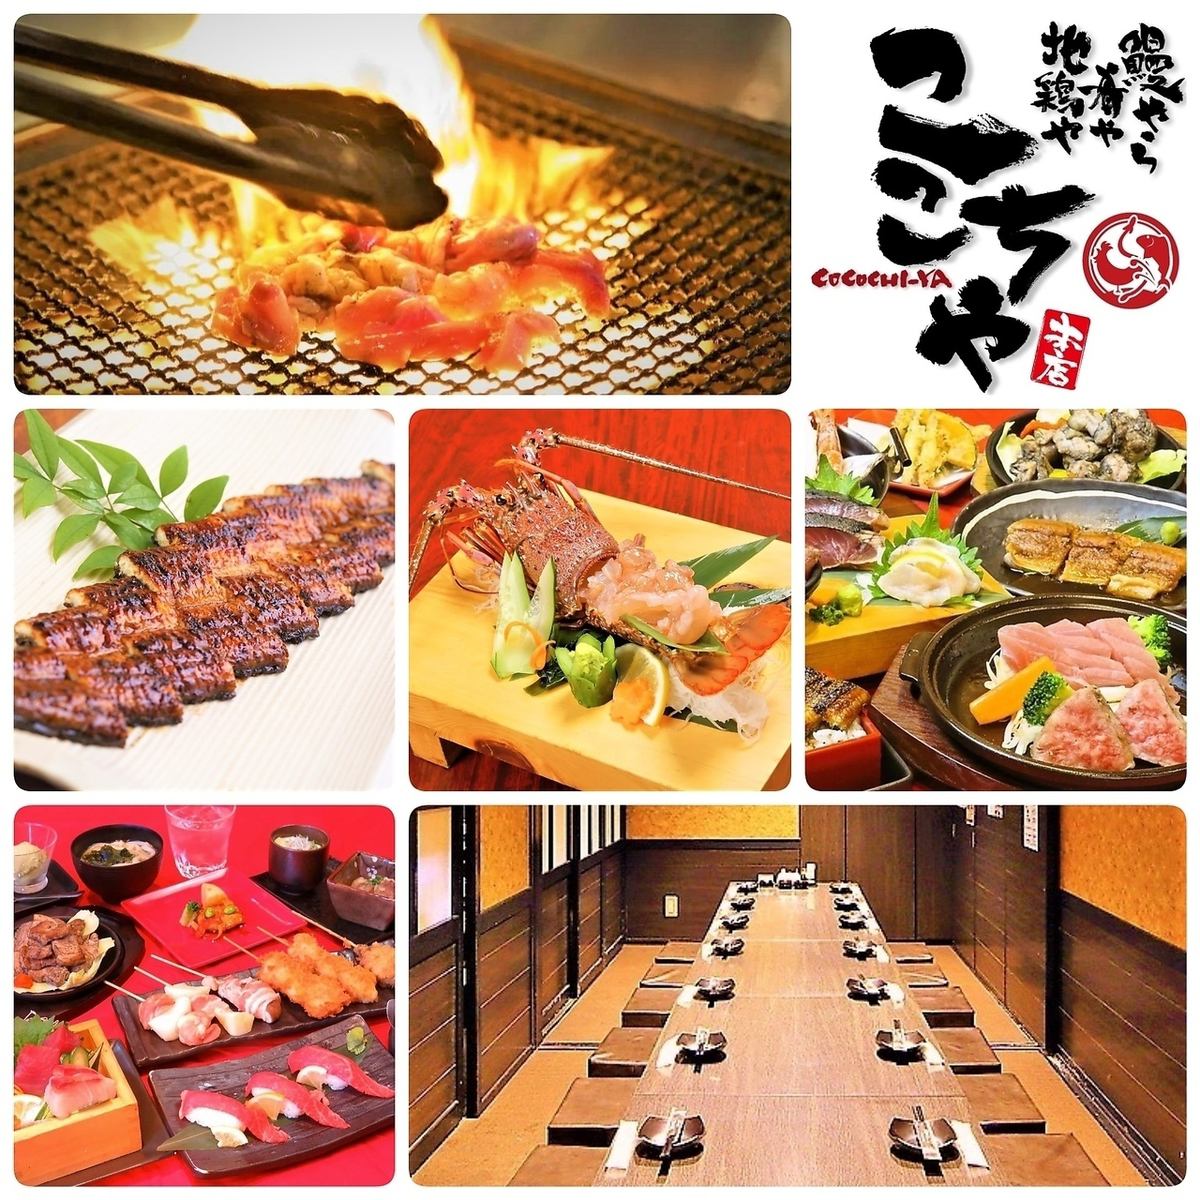 Kochiya的套餐風格是每人一道菜。非常適合娛樂或重要座位。